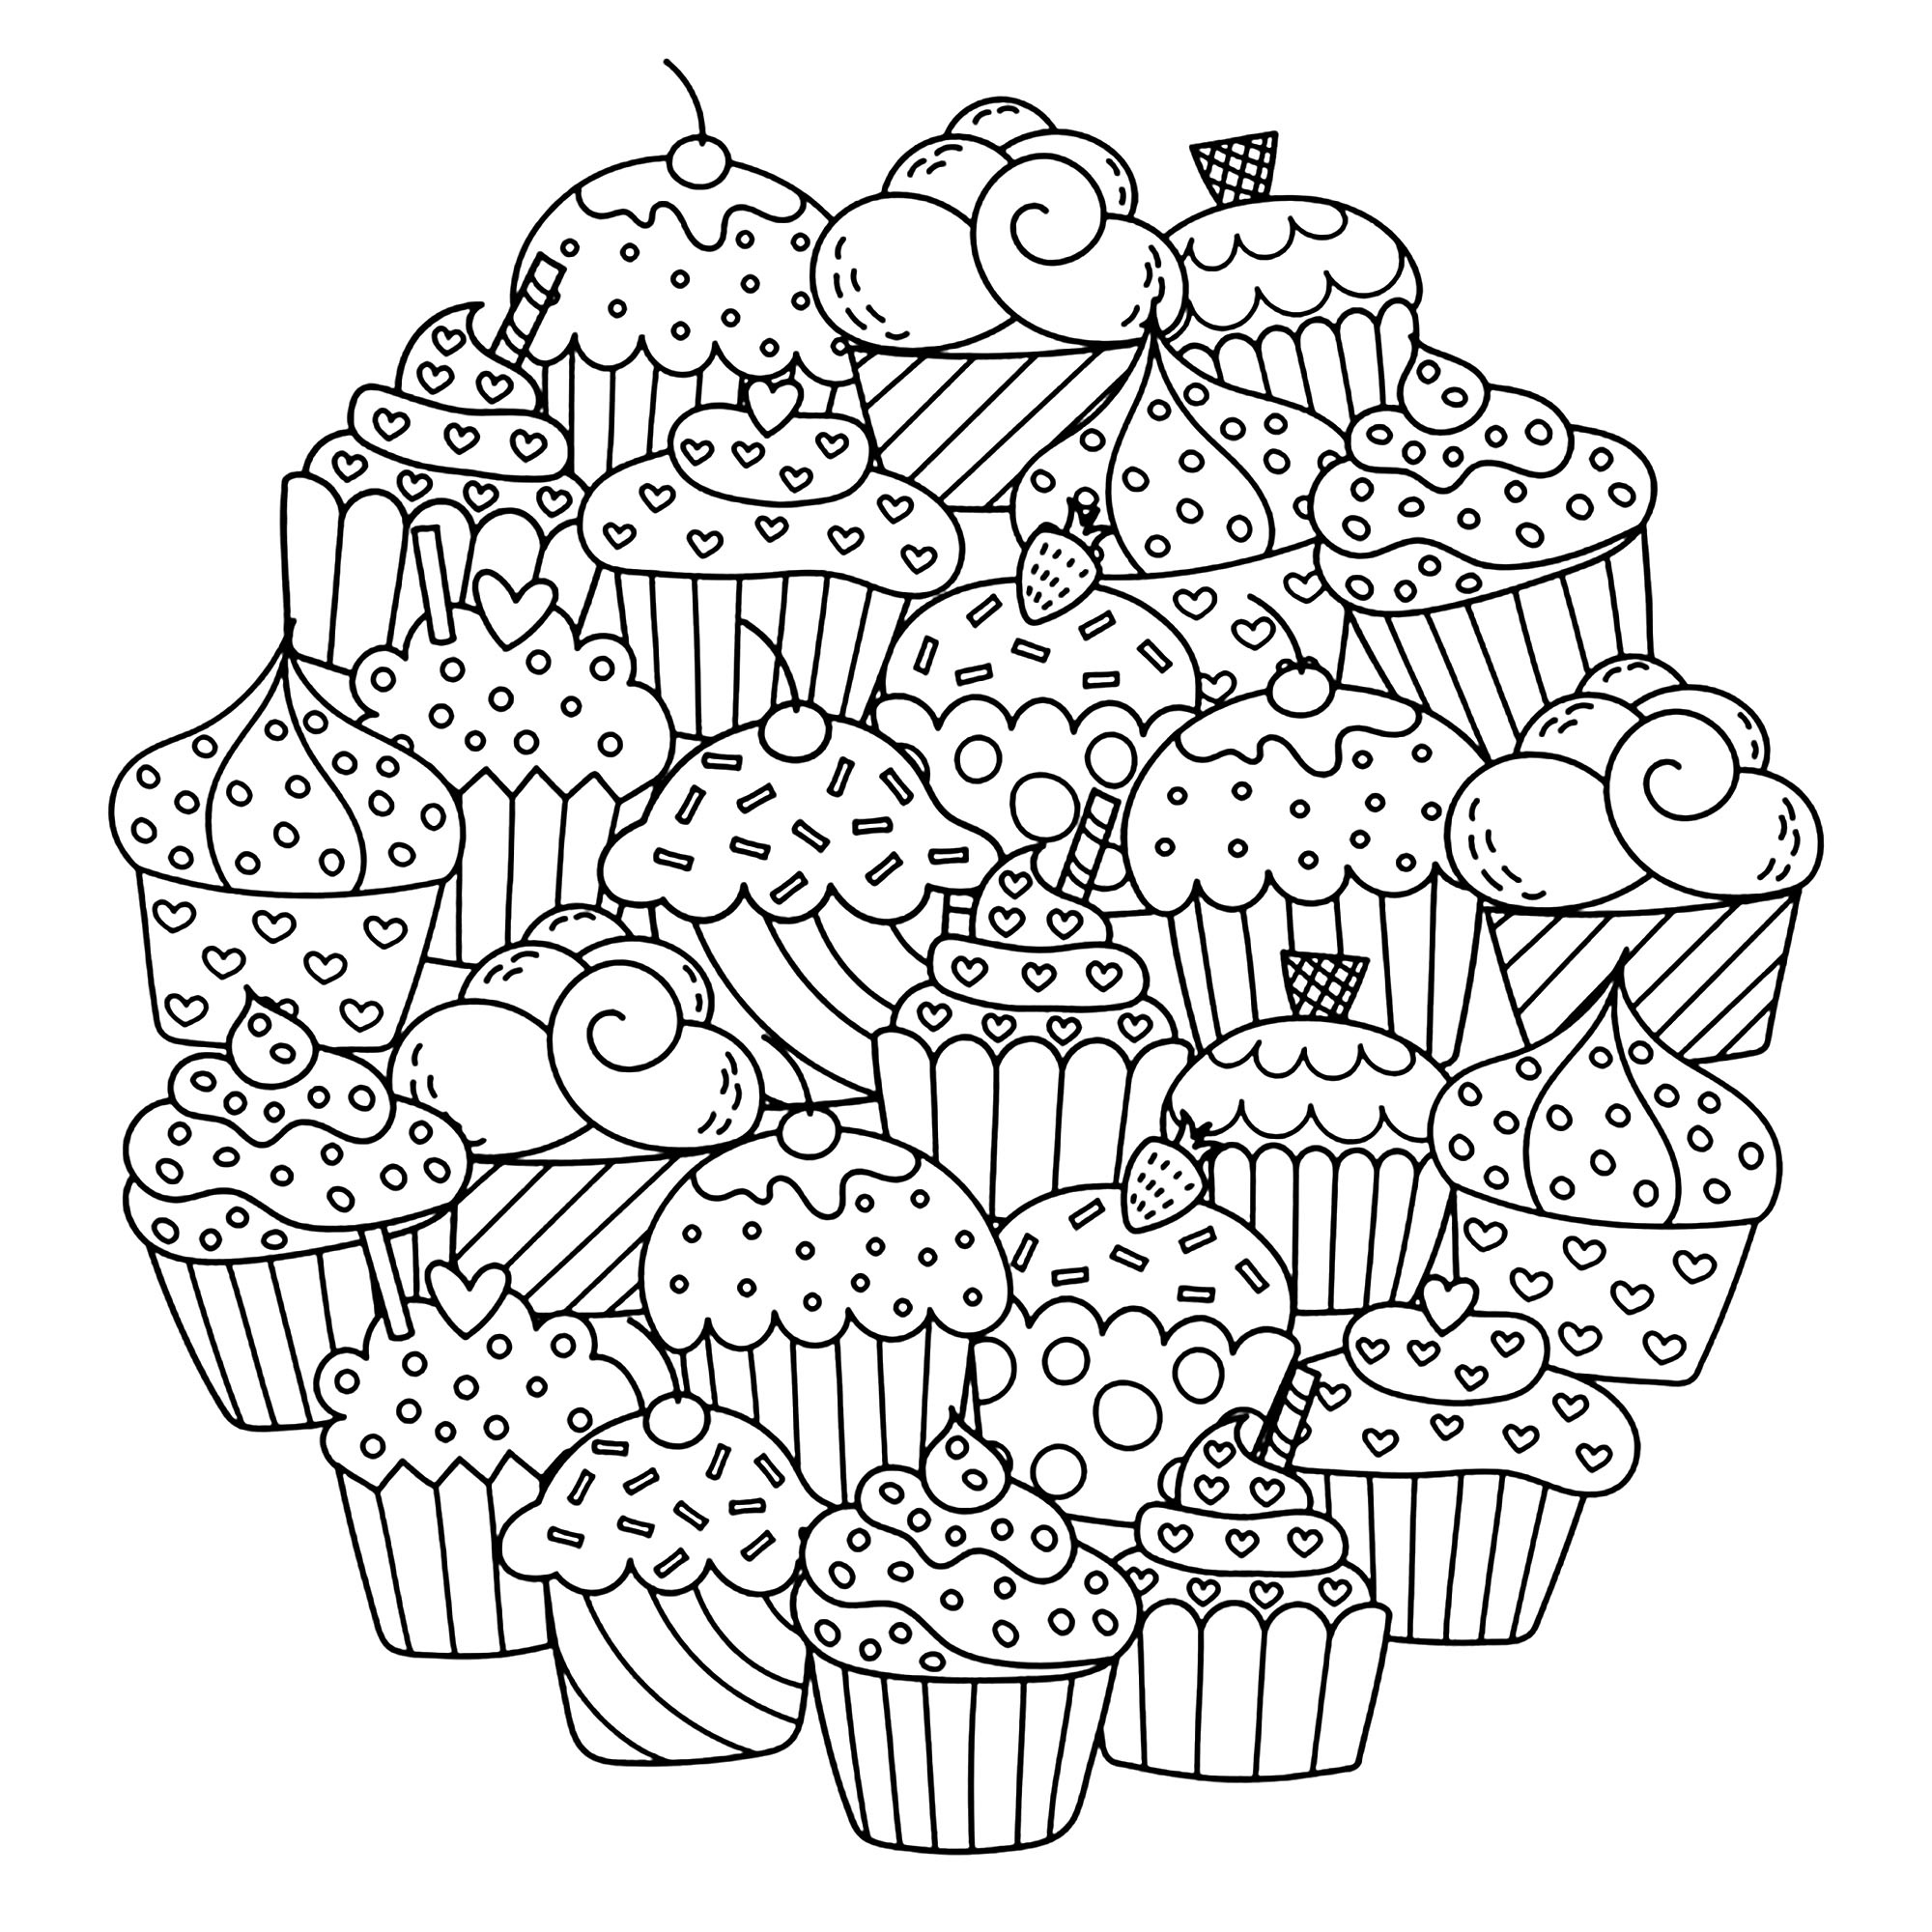 image=cup cakes coloring round cupcakes gulnara sabirova 1